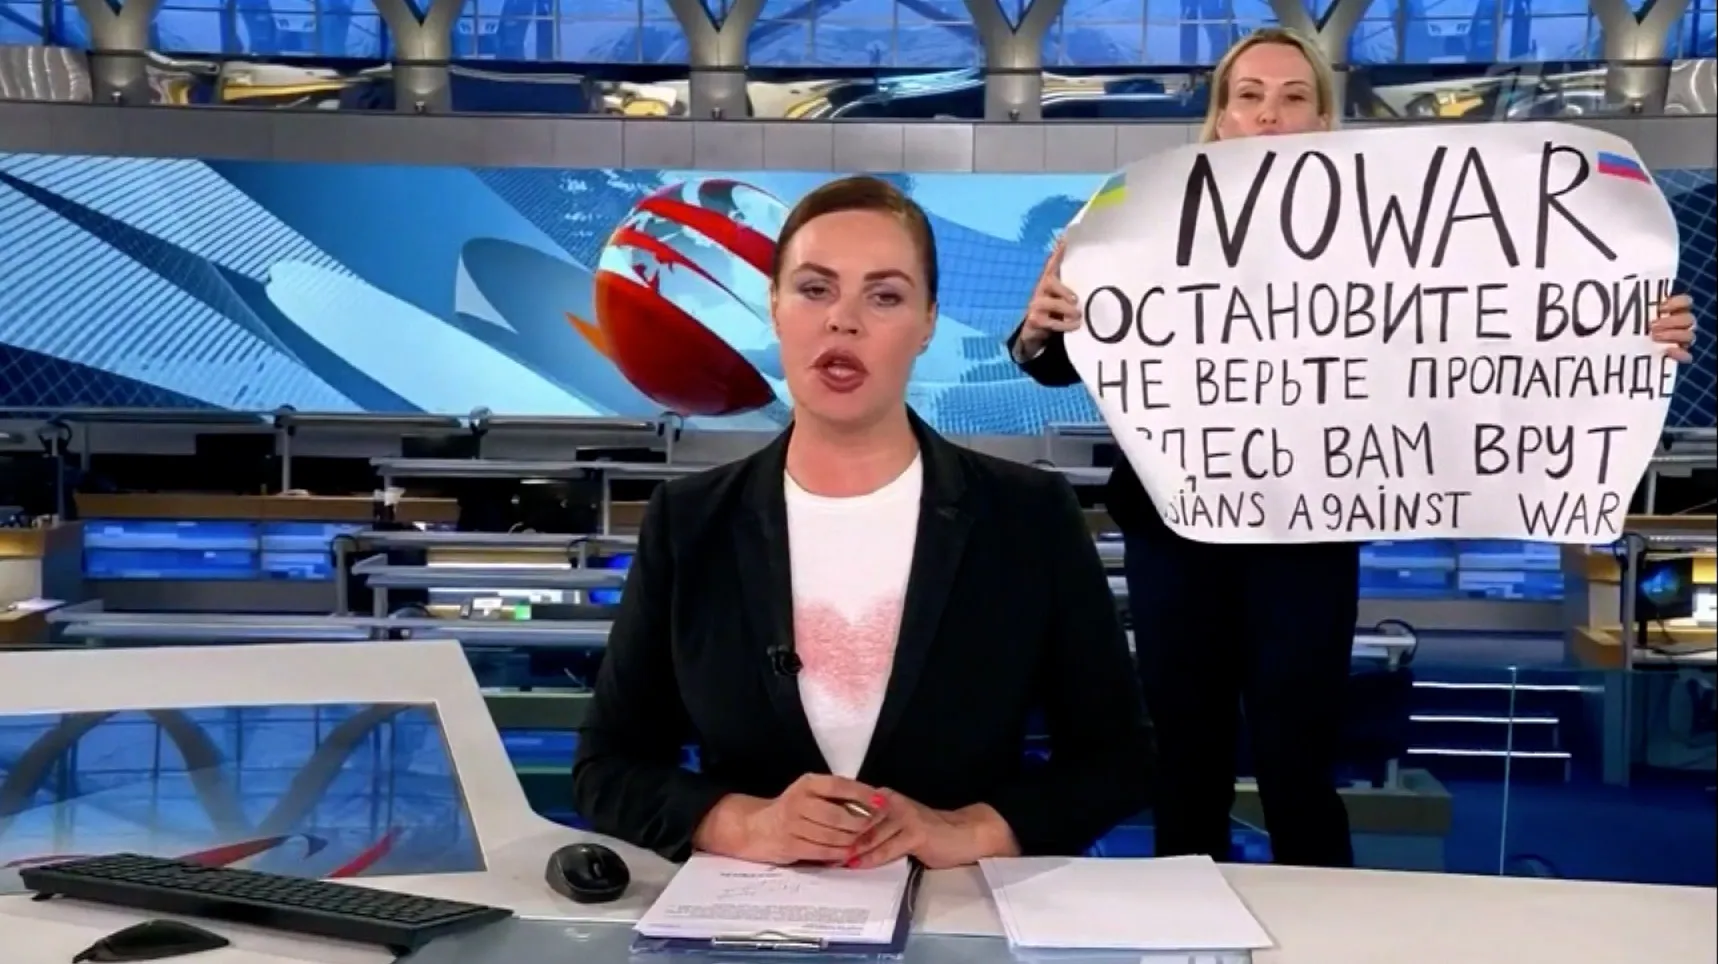 Journalist protests Russia's invasion of Ukraine